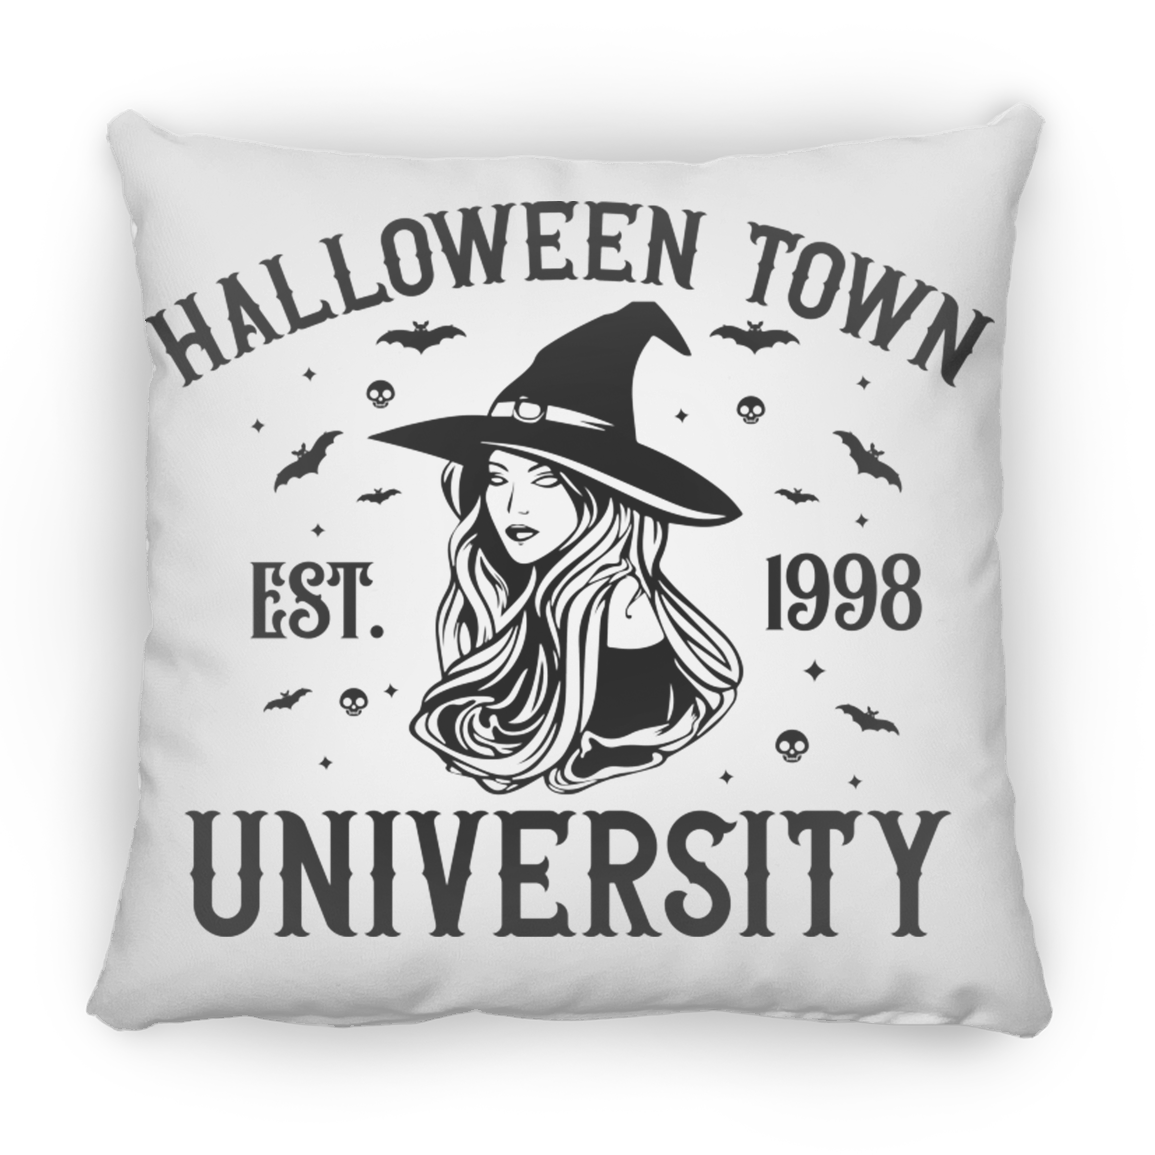 Halloween Town Medium Square Pillow